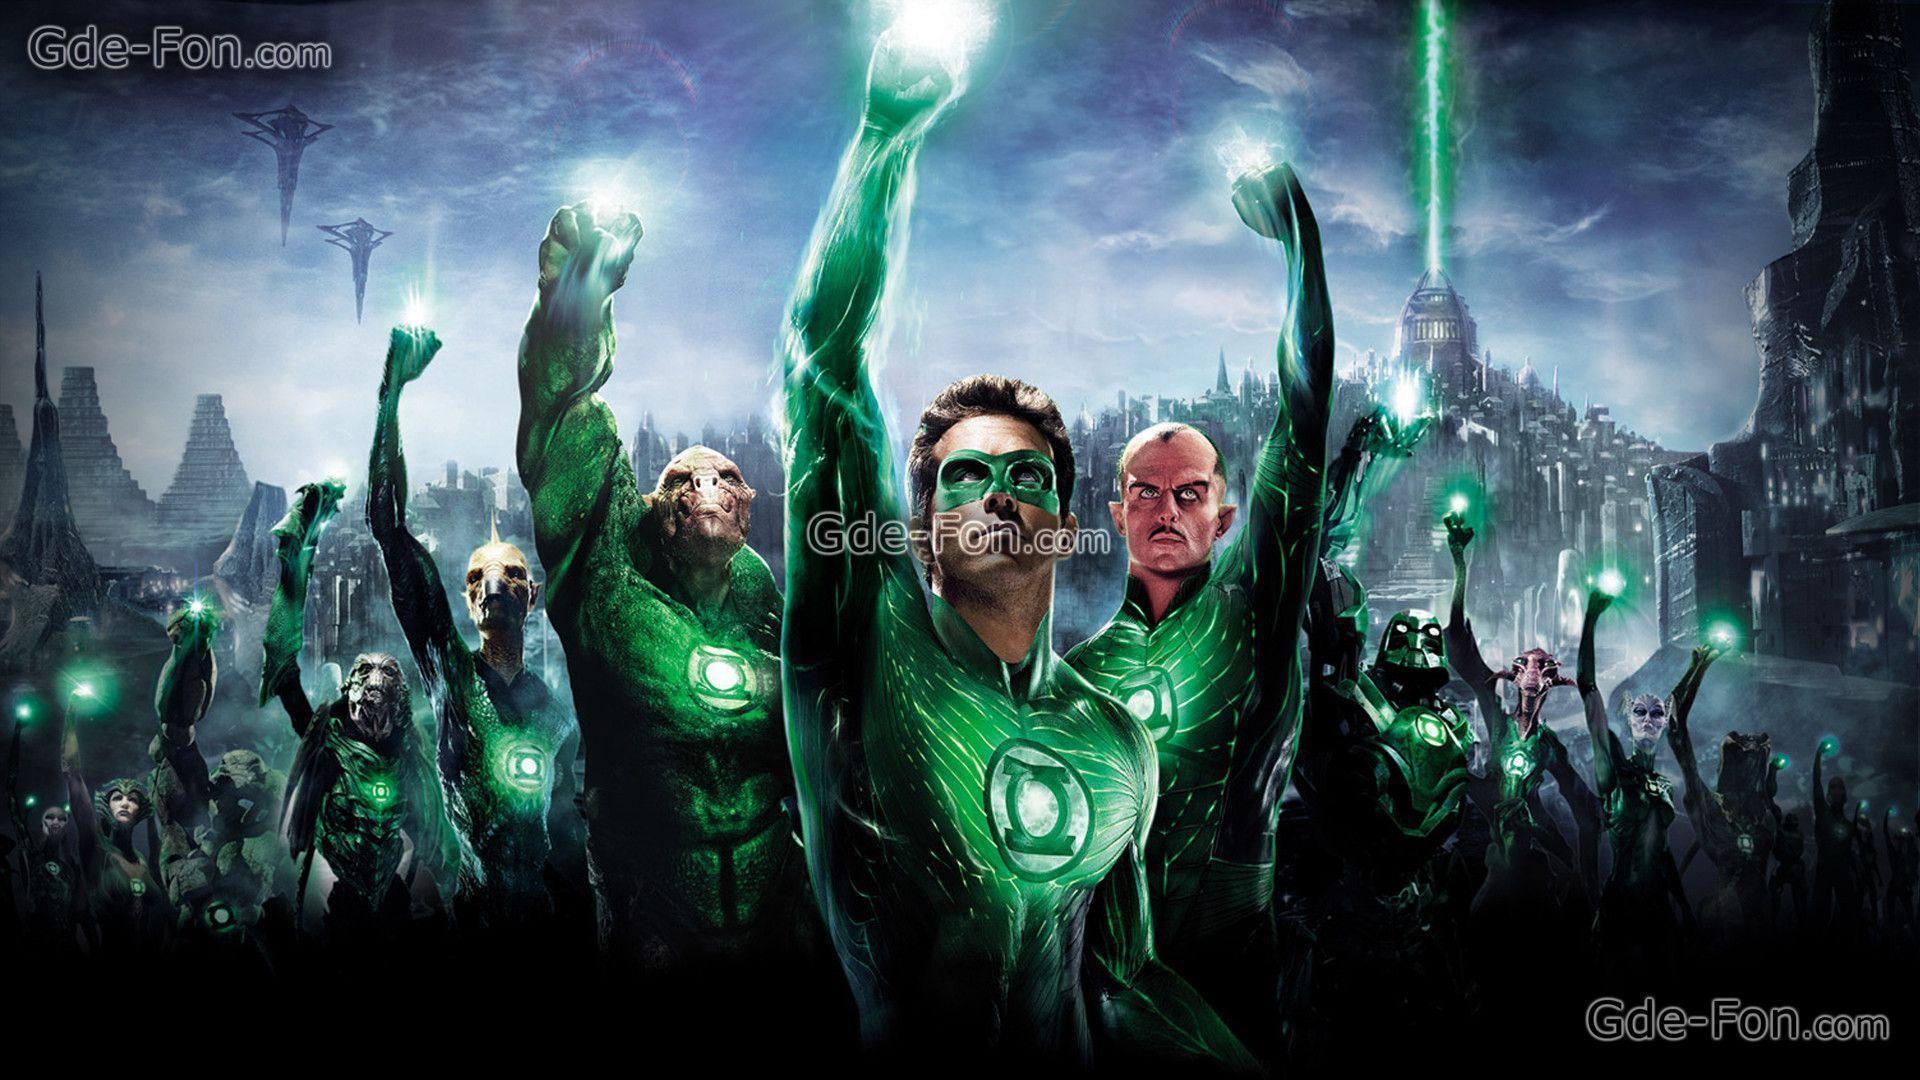 Download wallpaper Green Lantern, superhero, movie, fantasy free